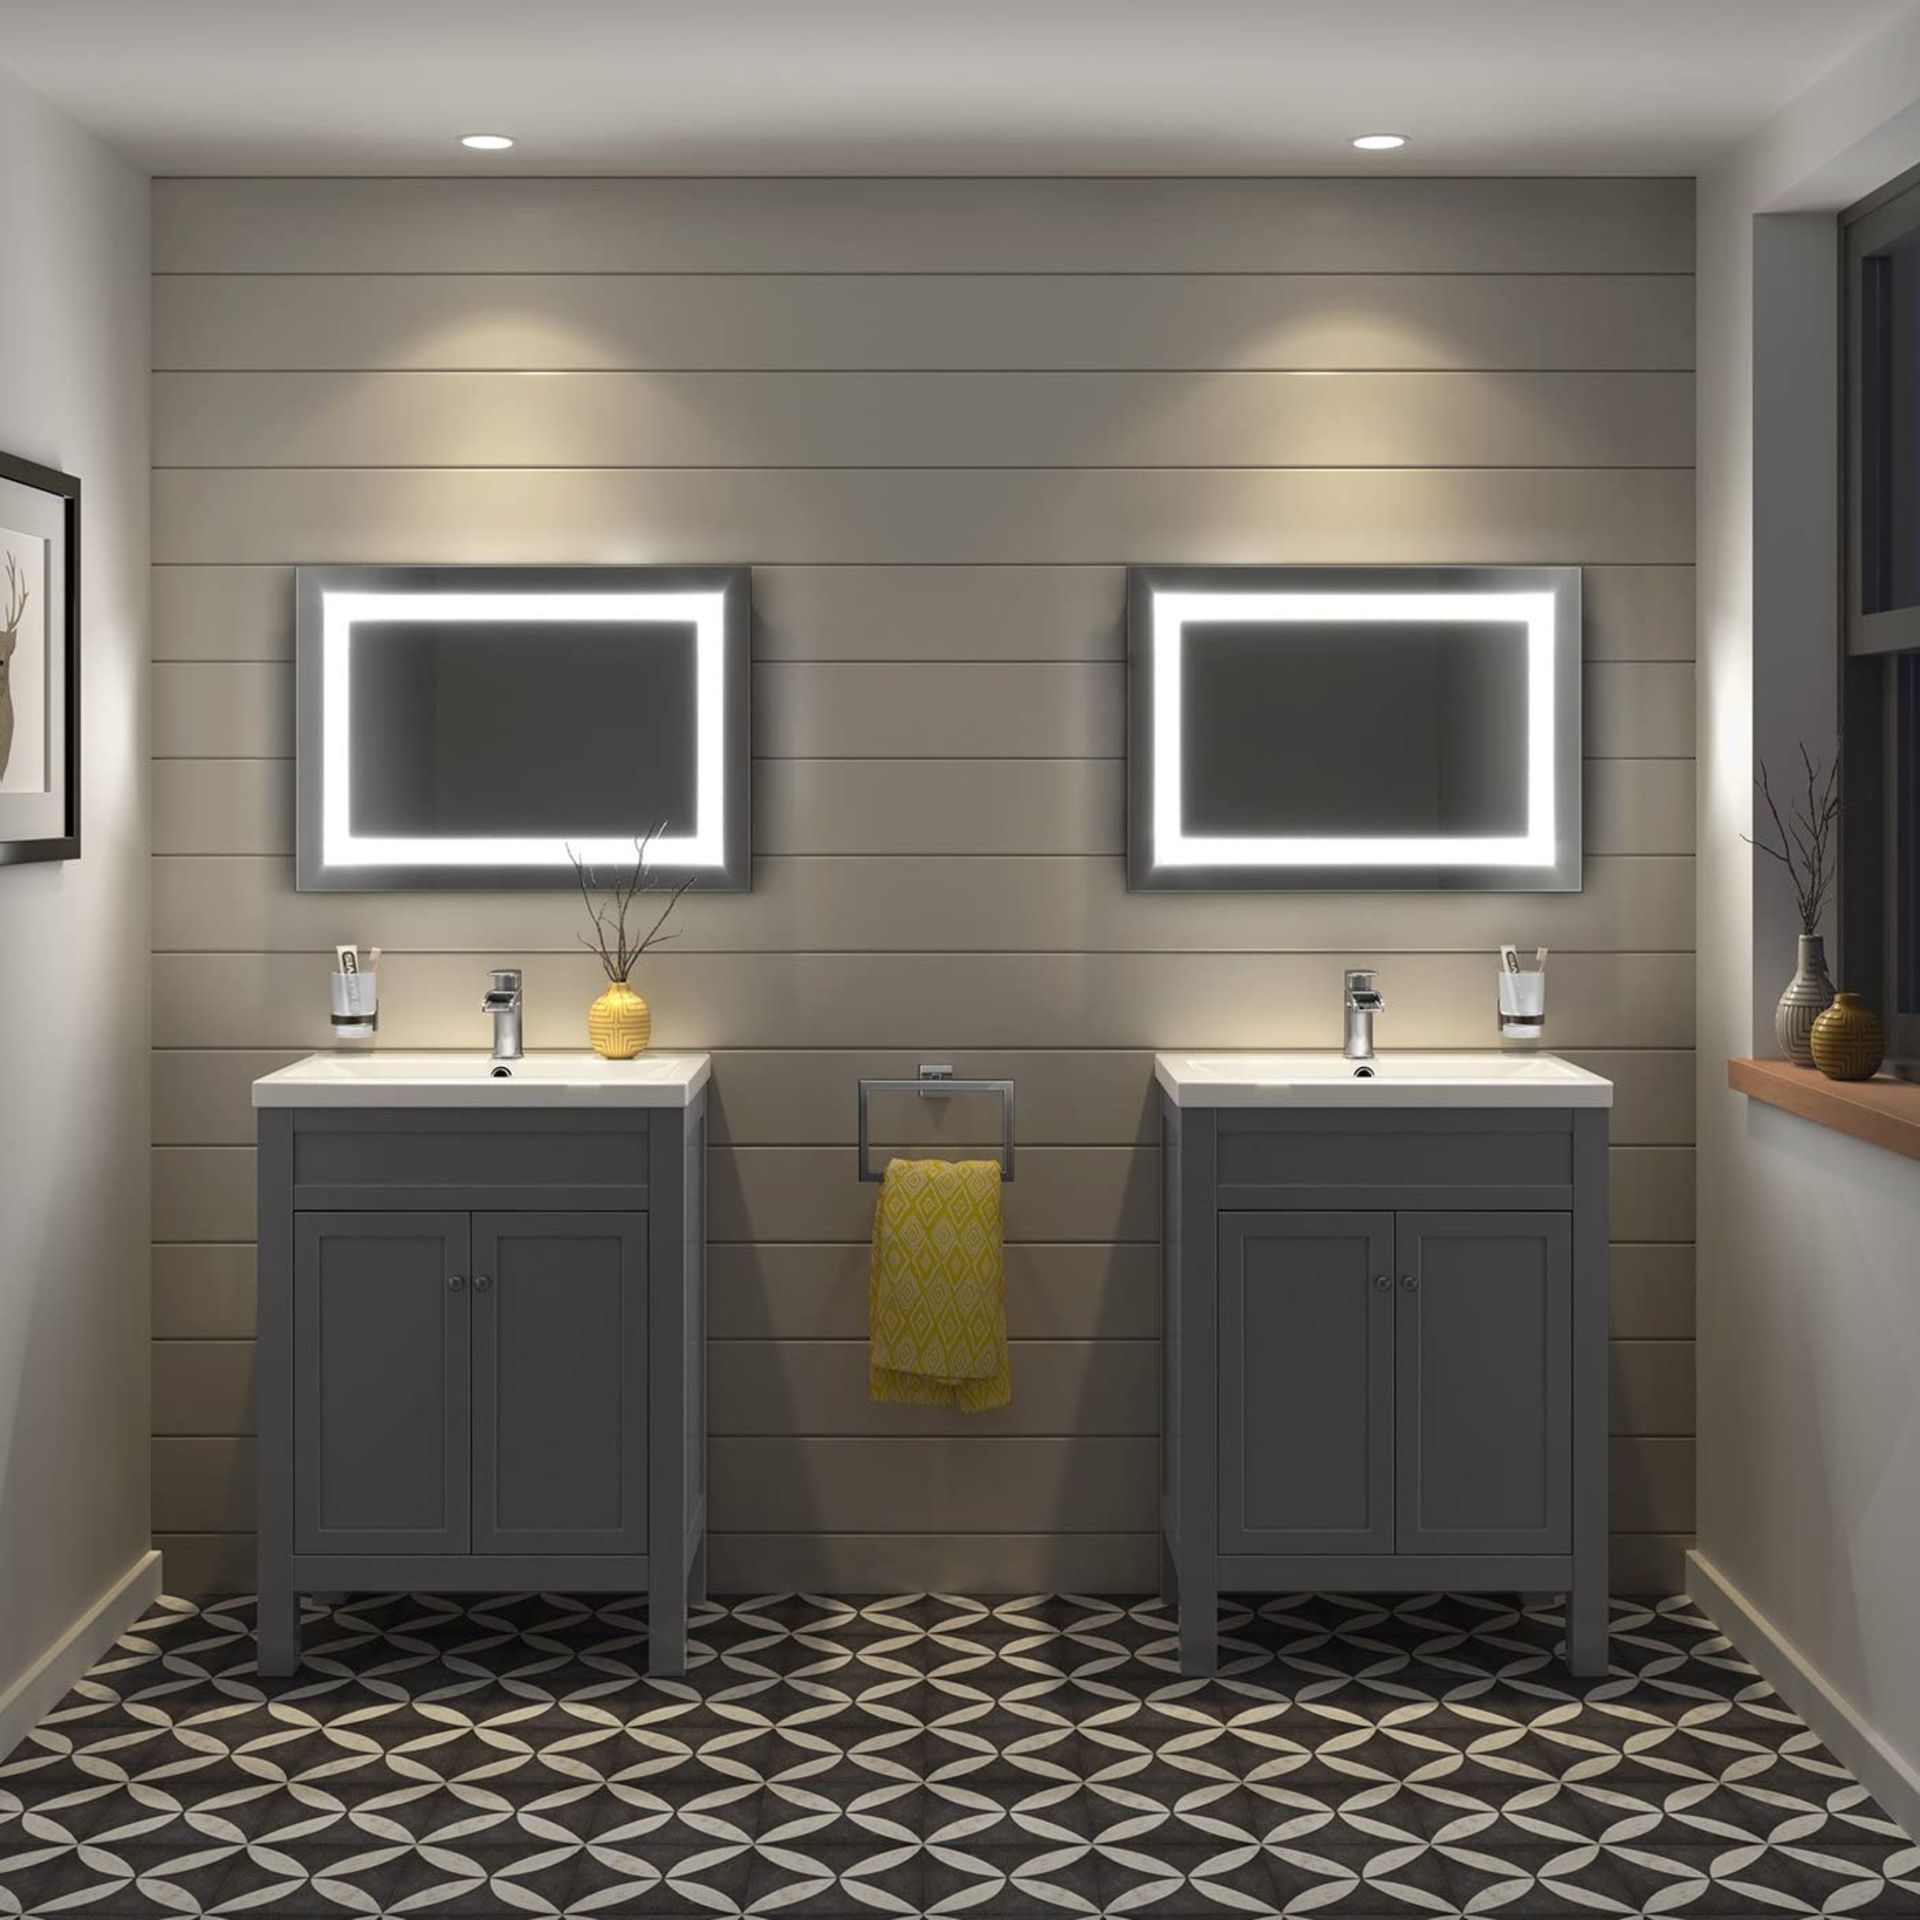 New & Boxed 500x700mm Modern Illuminated Backlit Led Light Bathroom Mirror + Demister Pad. - Image 2 of 2